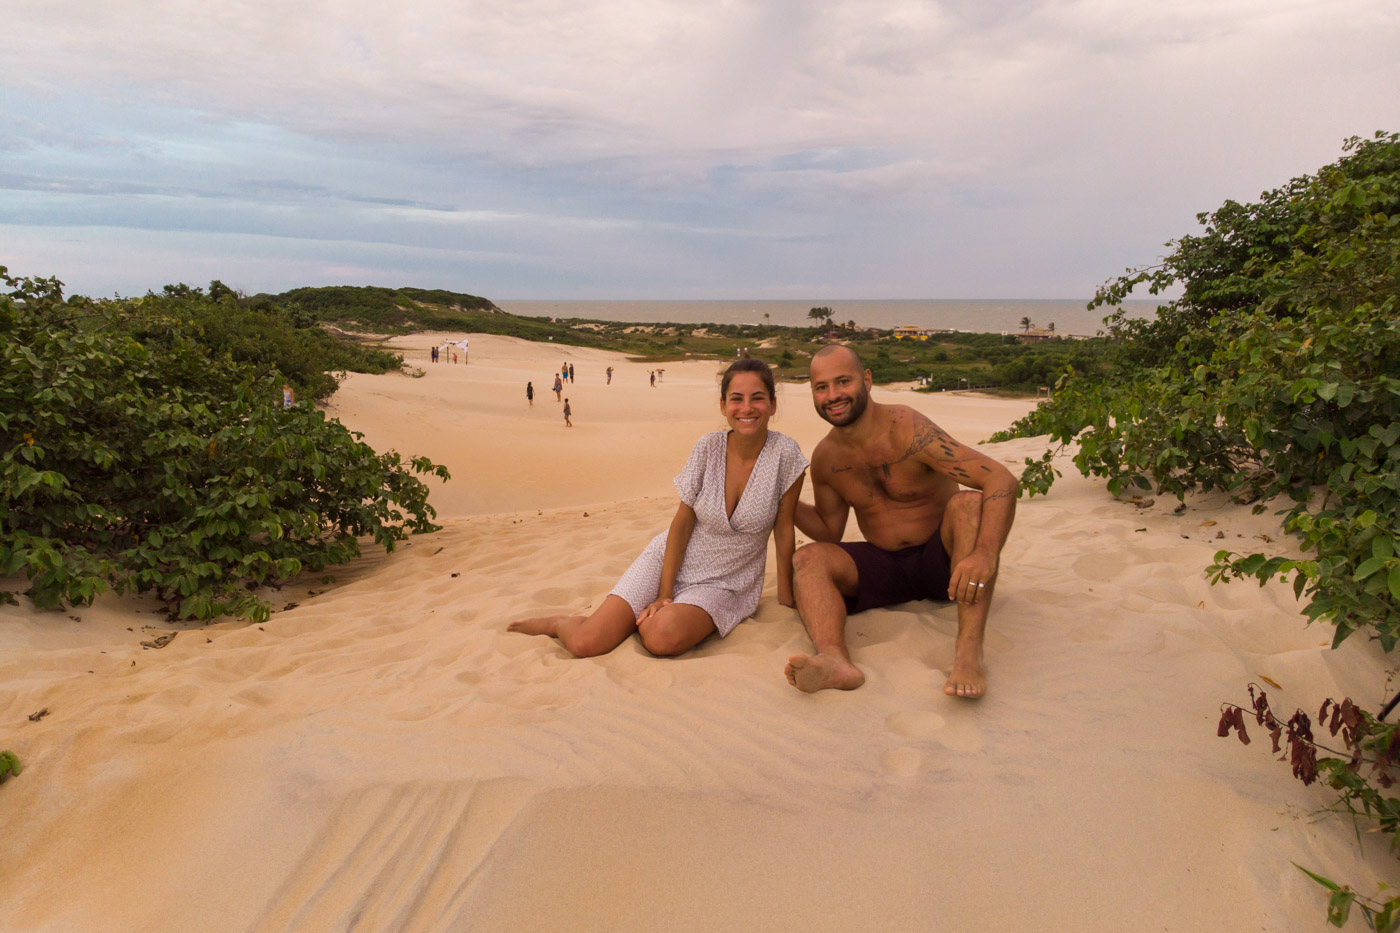 Tiago and Fernanda on top of the dunes